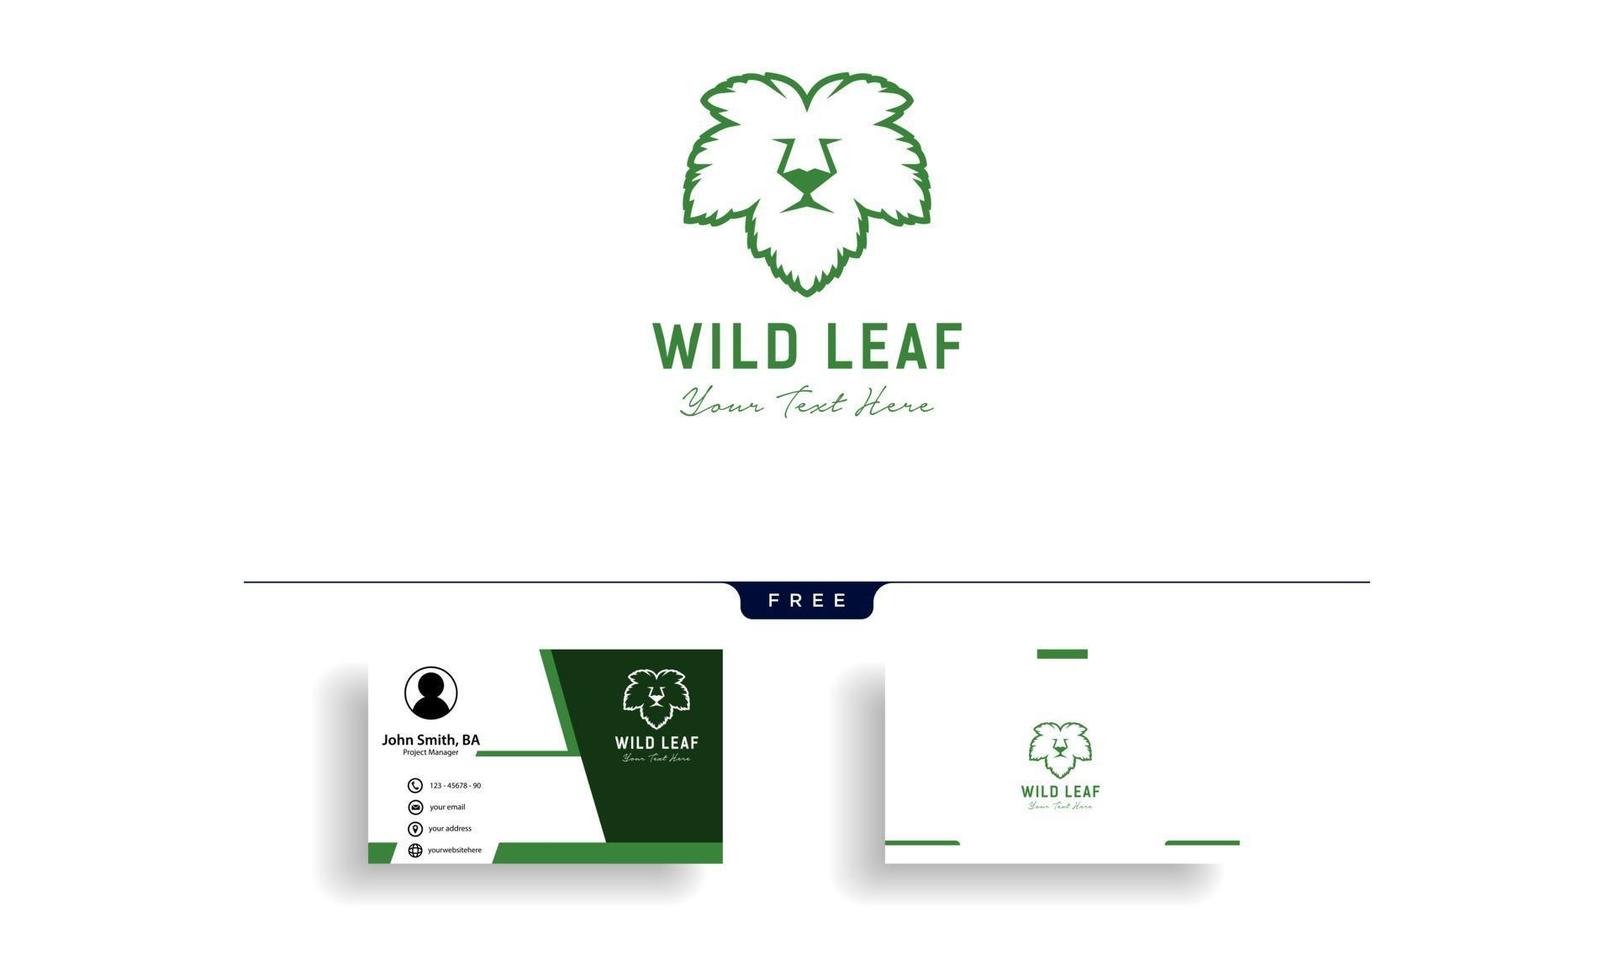 Löwe wildes Blatt kreative Logo Vorlage Vektor-Illustration mit Visitenkarte Vorlage Vektor